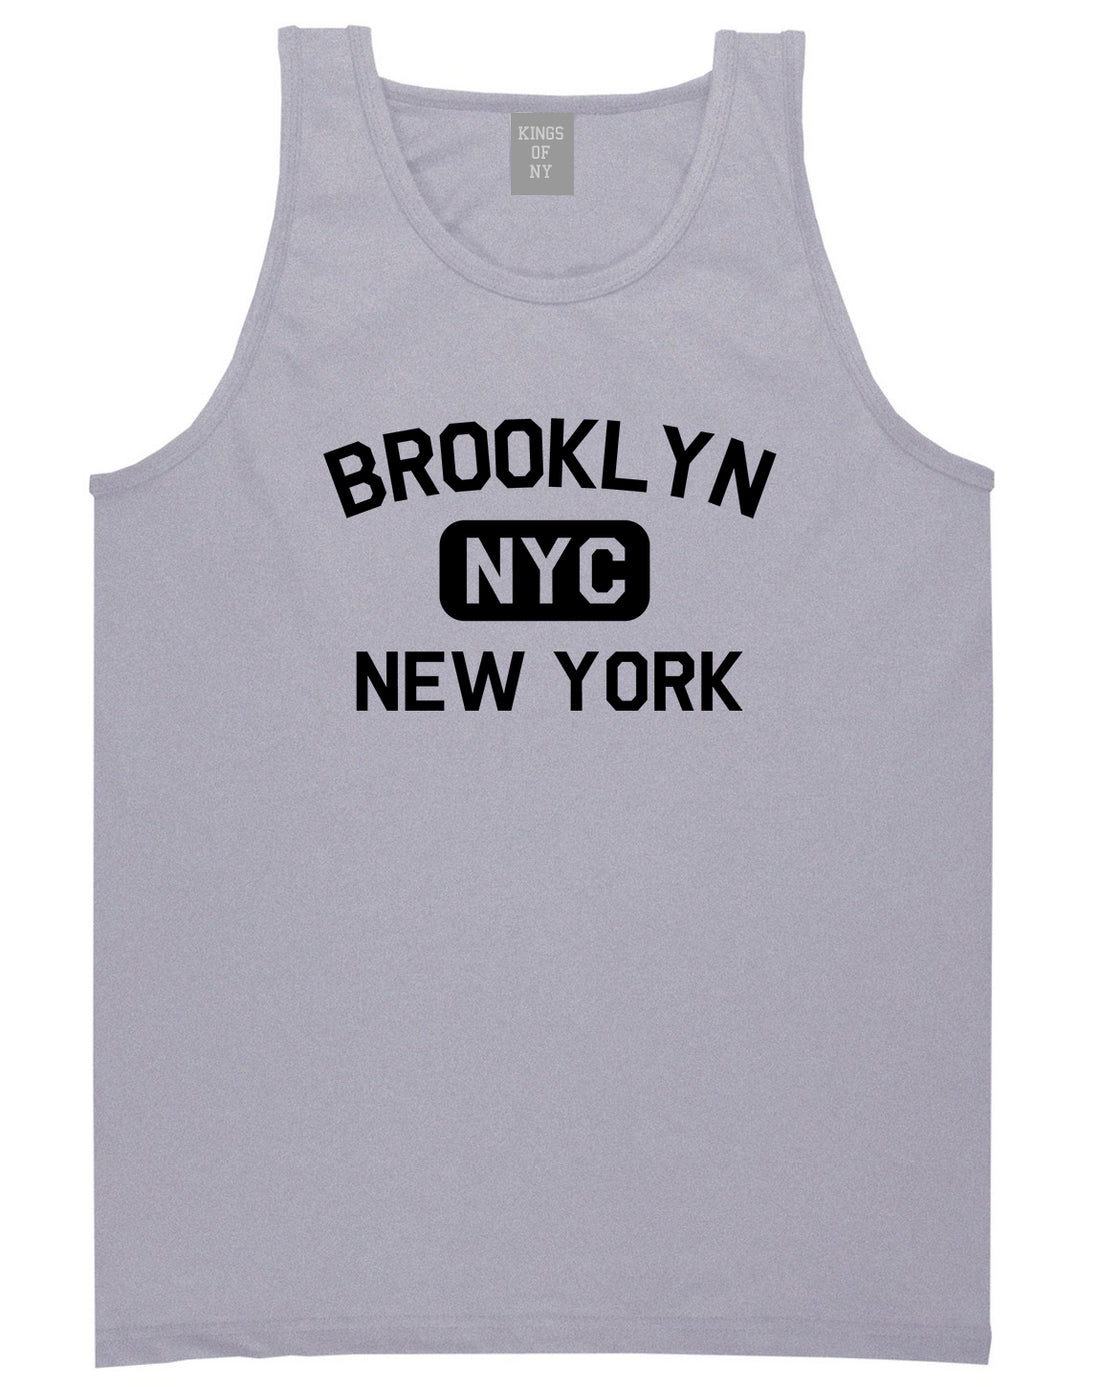 Brooklyn Gym NYC New York Mens Tank Top T-Shirt Grey